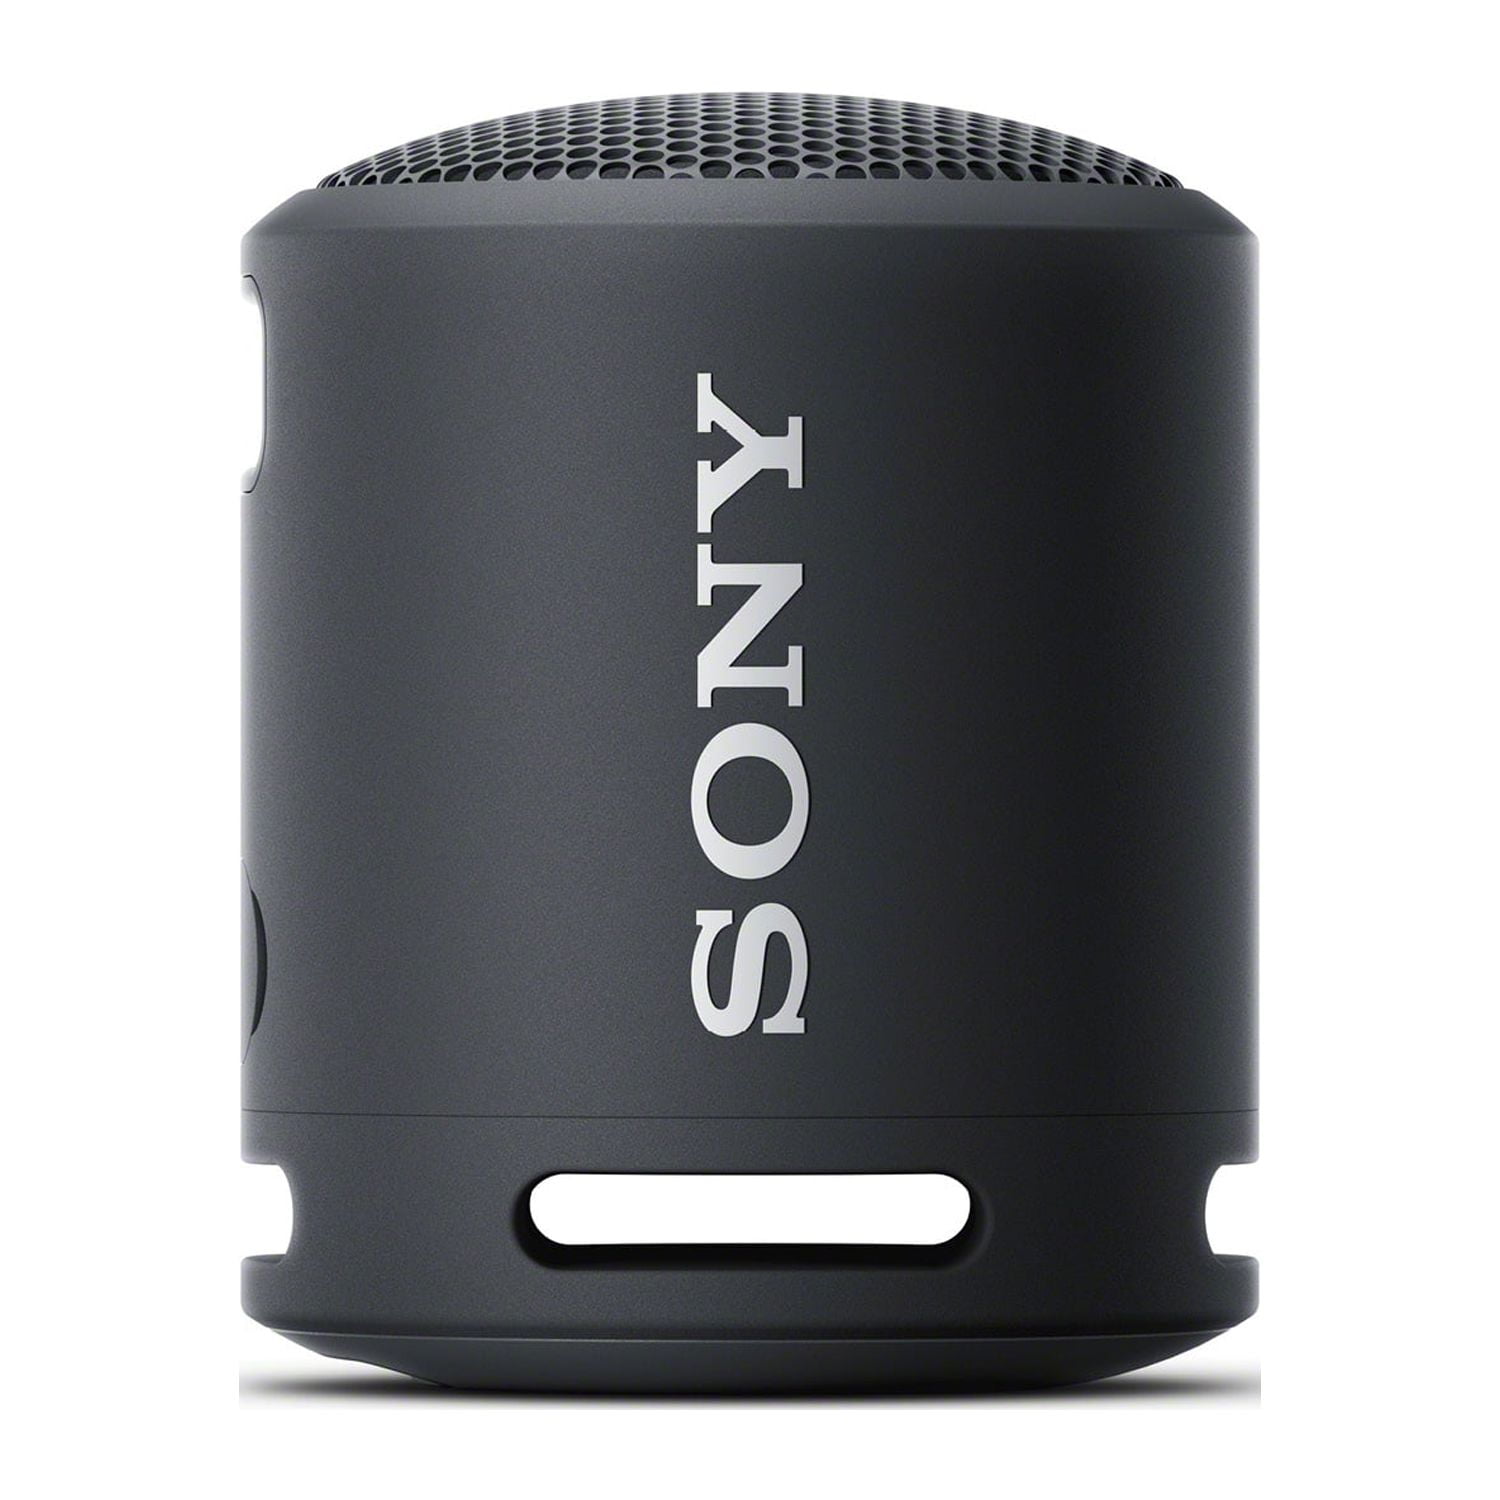  Sony SRS-XB13 Extra BASS Altavoz compacto portátil inalámbrico  IP67 impermeable Bluetooth, rosa coral (SRSXB13/P) : Electrónica